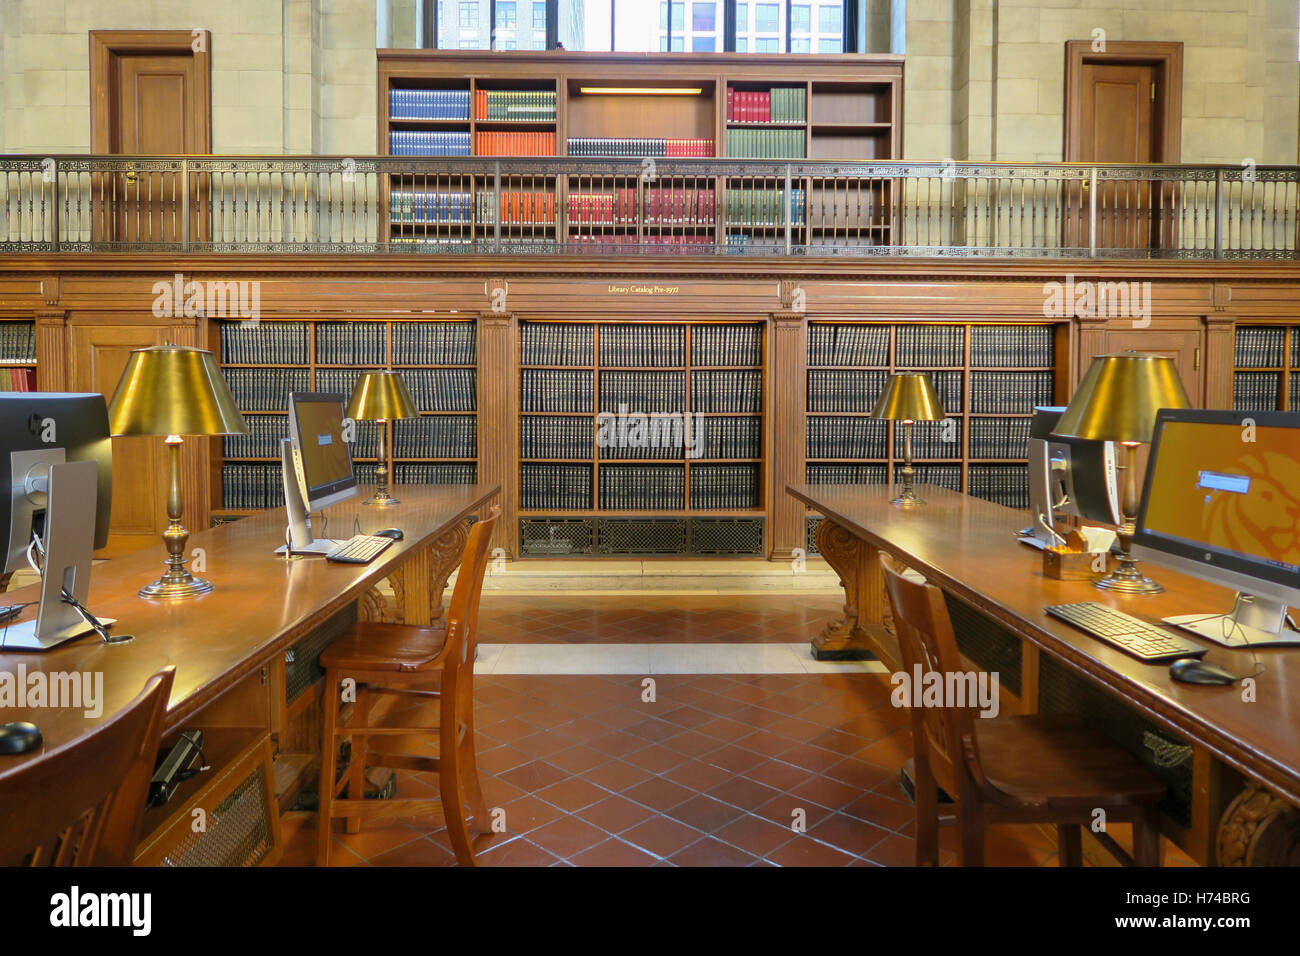 Bill Blass Public Catalog Room, New York Public Library, NYC Stock Photo